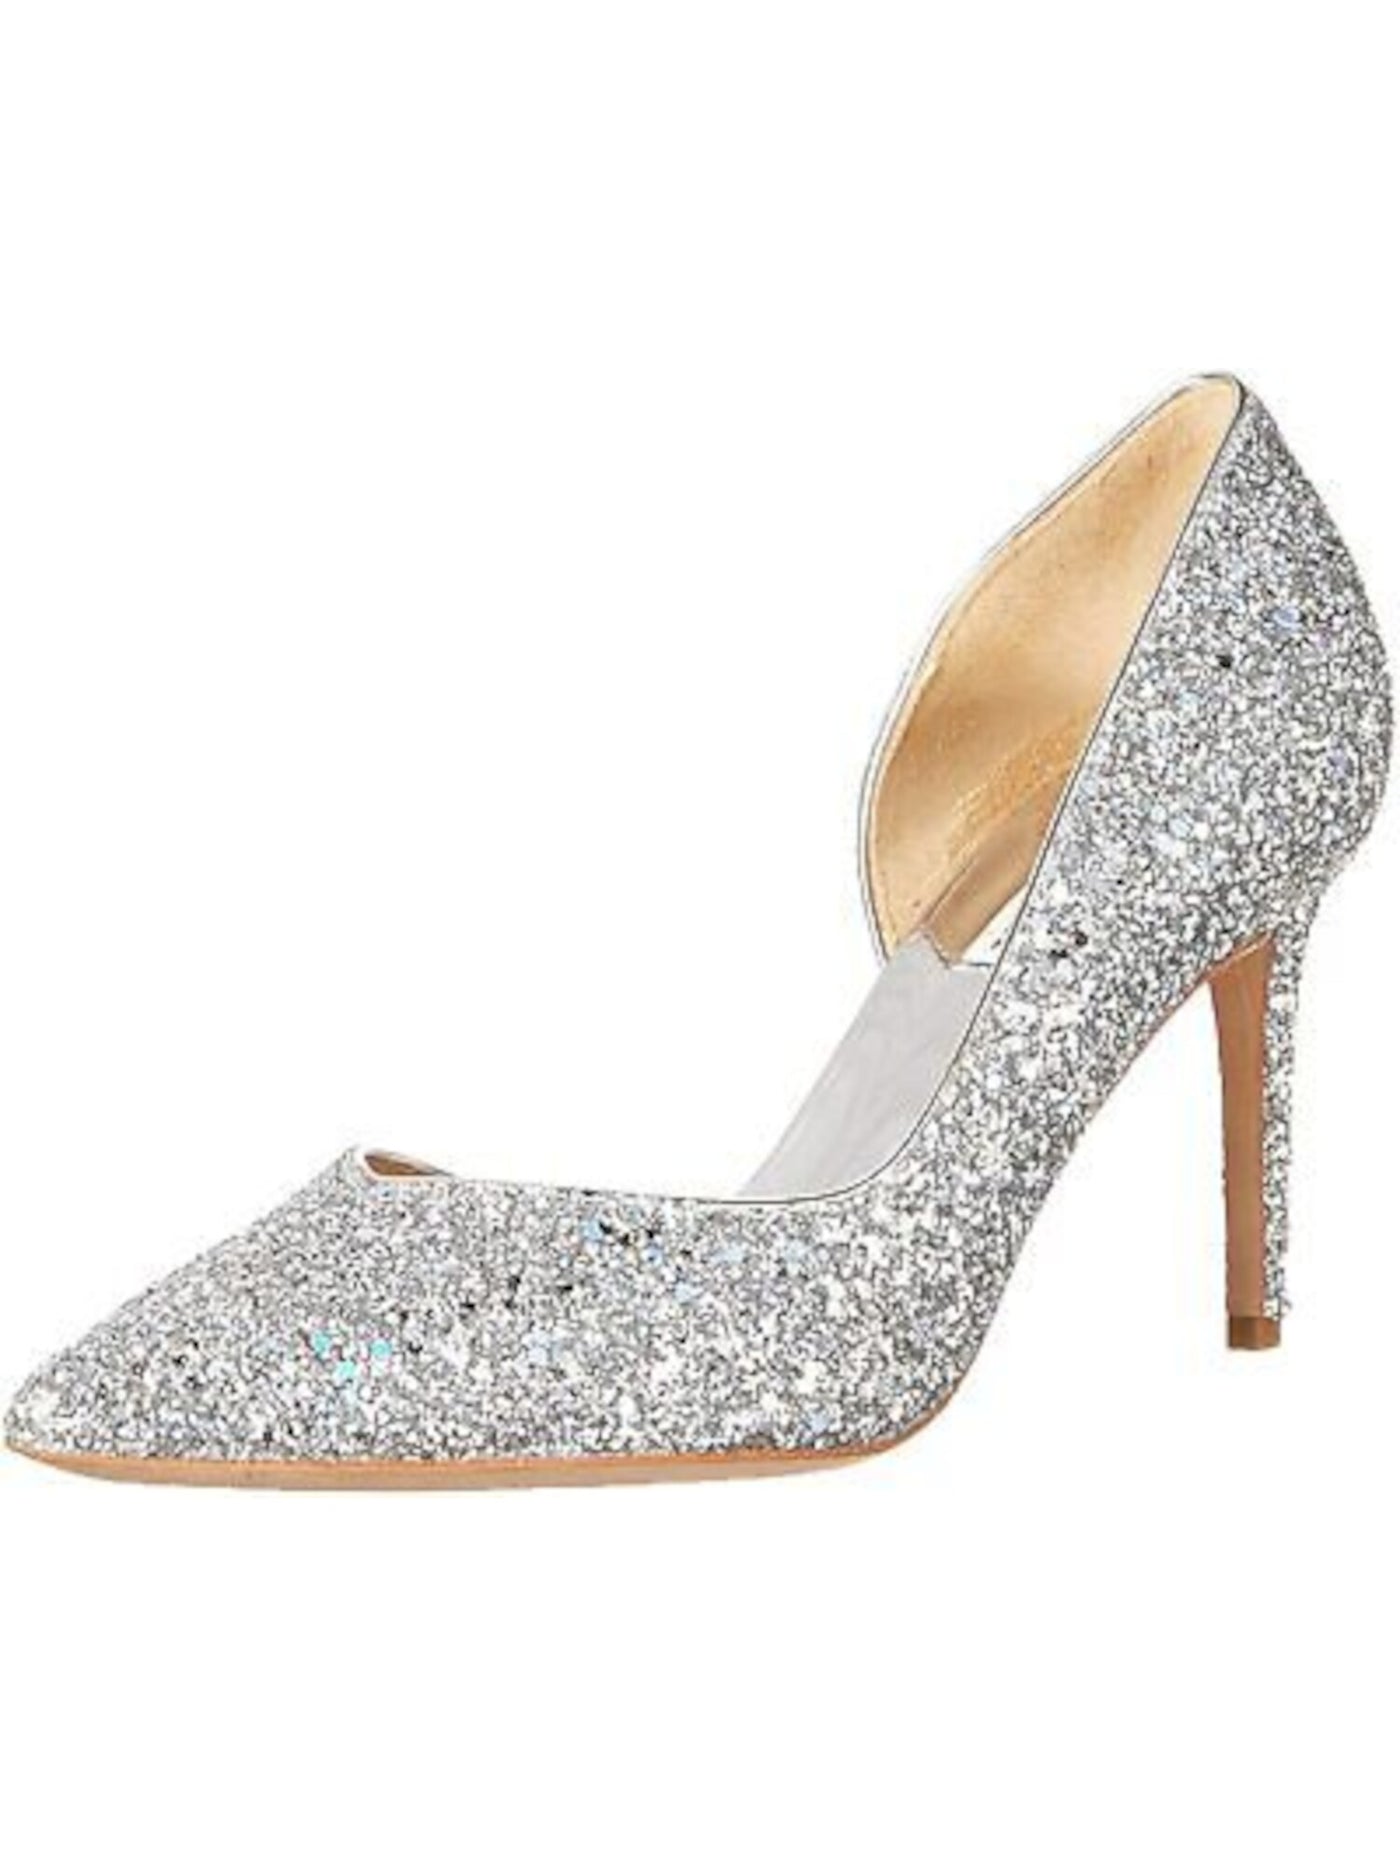 BADGLEY MISCHKA Womens Silver Dorsay Glitter Padded Daisy Pointed Toe Stiletto Slip On Leather Dress Pumps 7 M